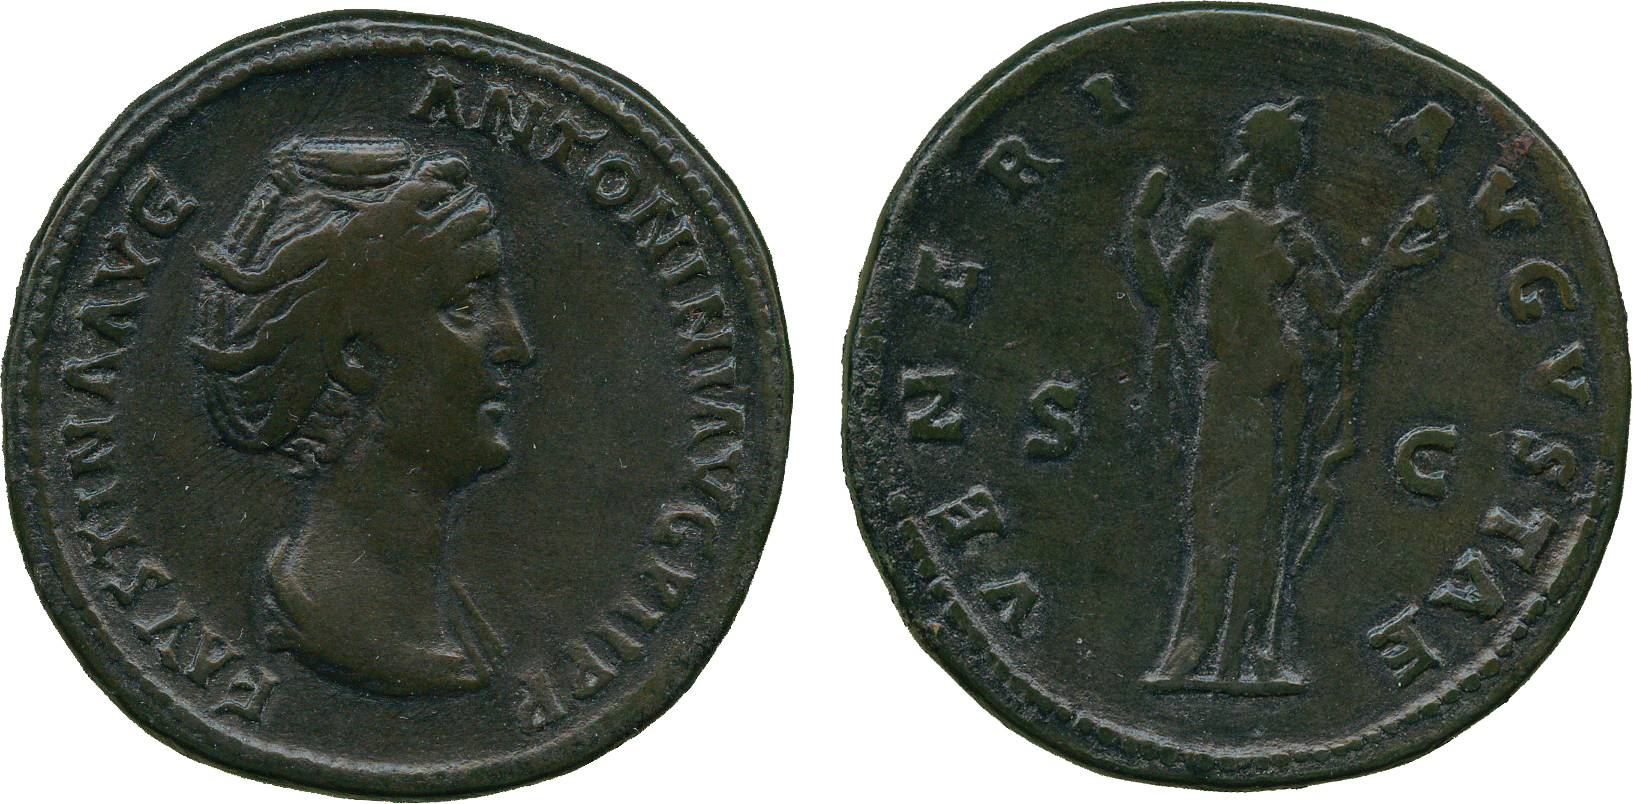 ANCIENT COINS, ROMAN COINS, Faustina Snr (wife of Antoninus Pius), Æ Sestertius, struck AD 138-41,